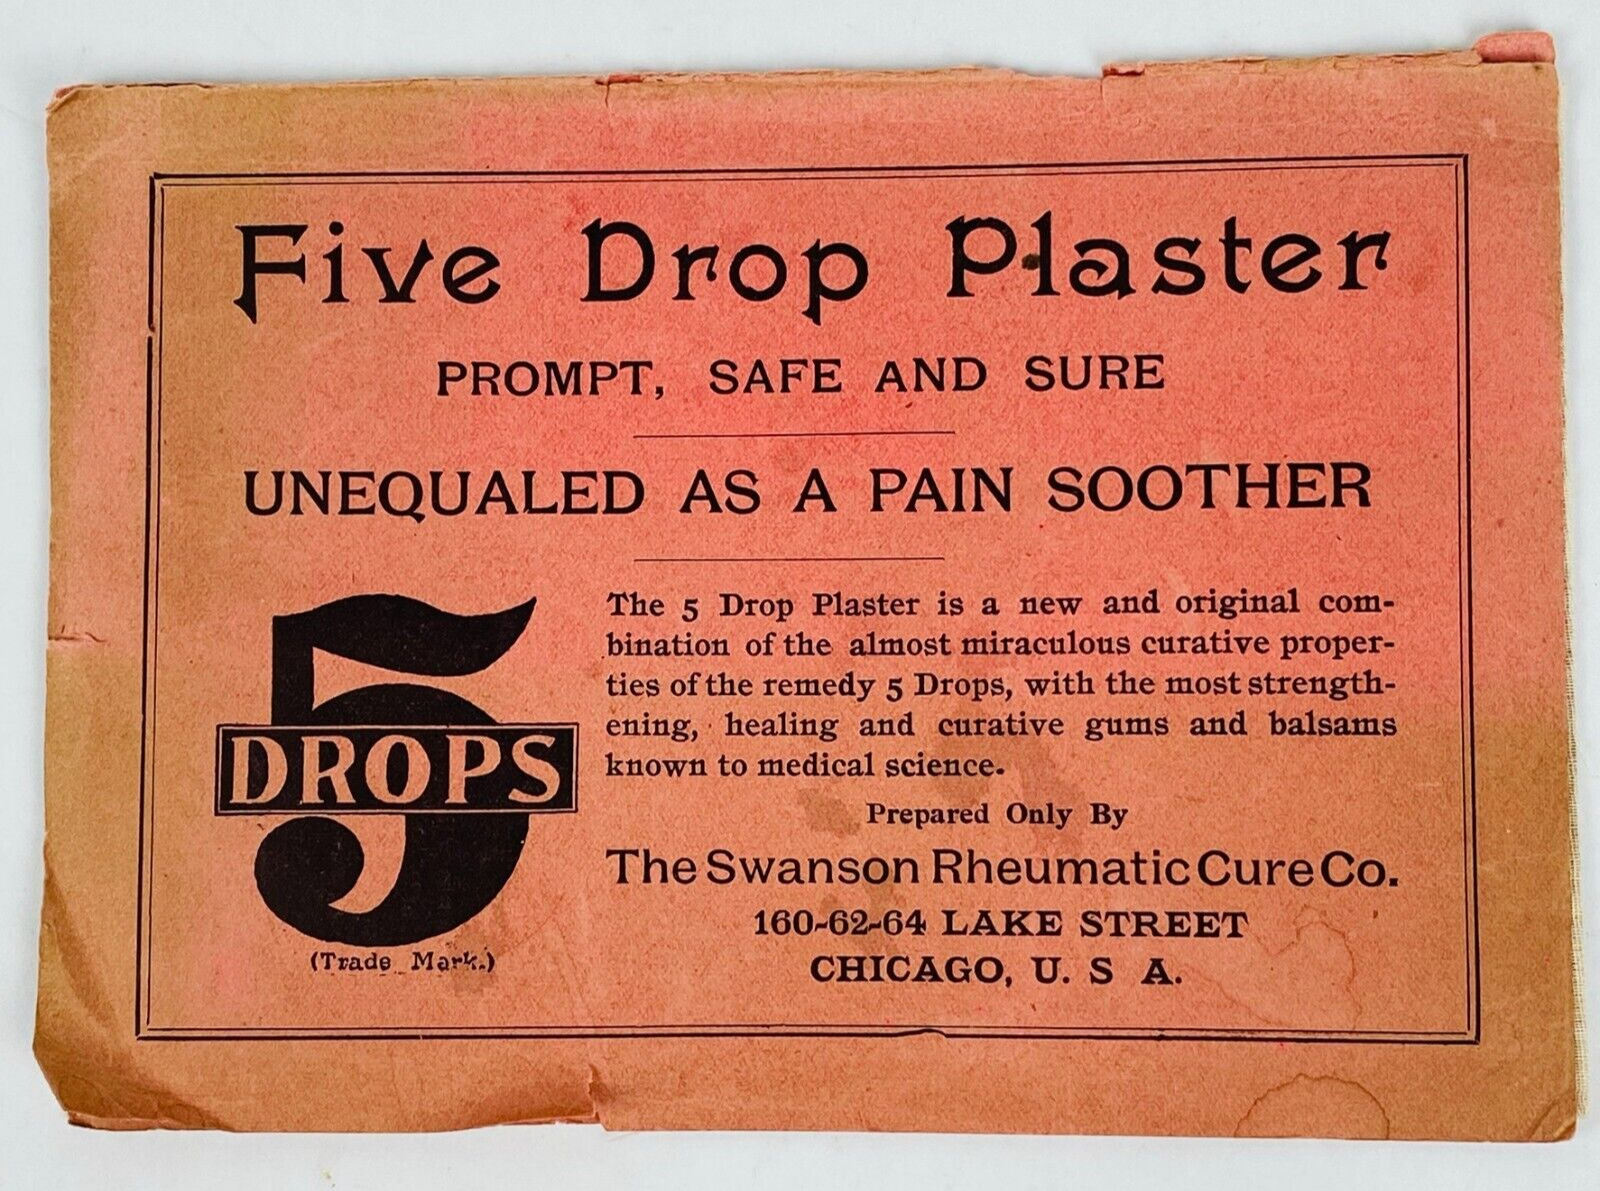 Swanson Rheumatic Cure Co. Five Drop Plaster Quack Medicine Advertising Vintage